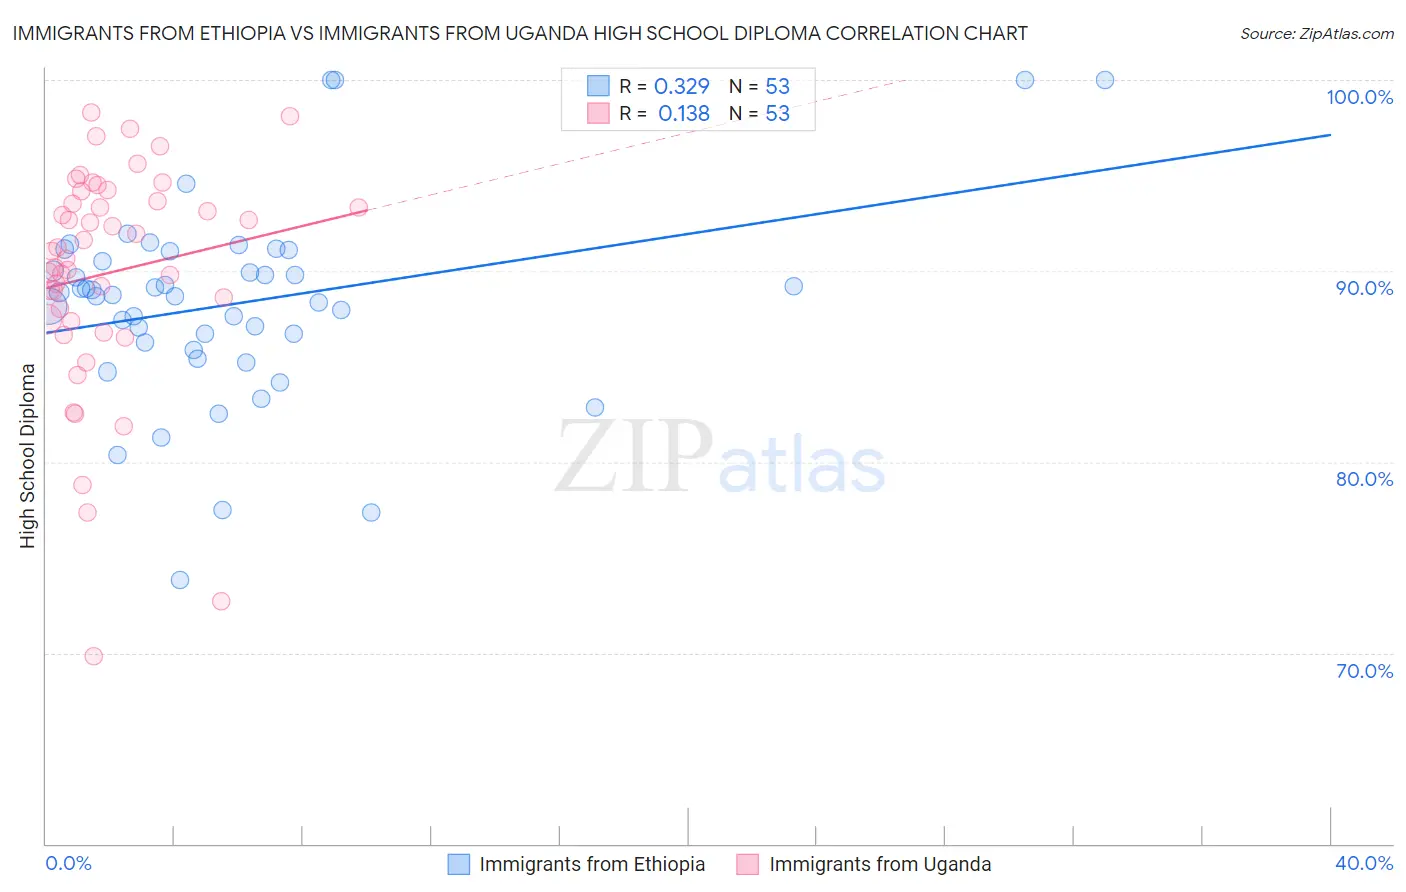 Immigrants from Ethiopia vs Immigrants from Uganda High School Diploma